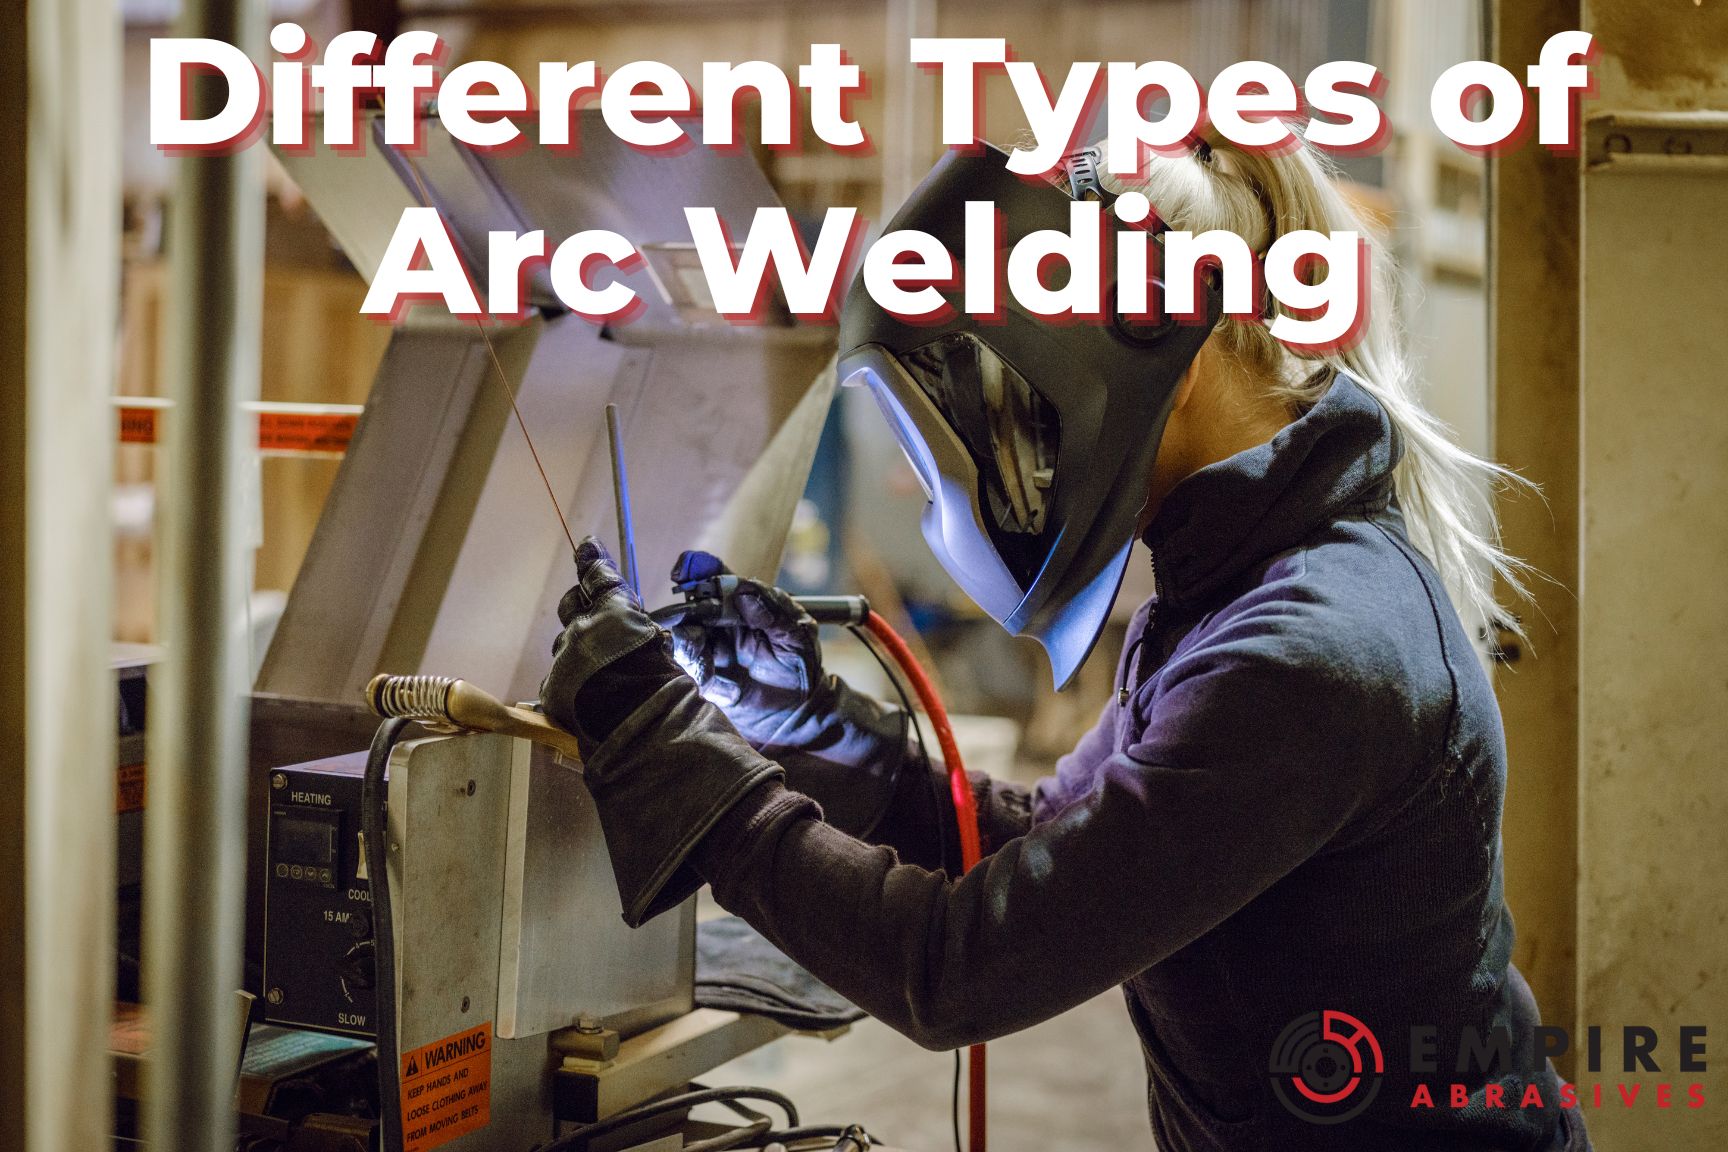 Different types of arc welding blog header - image of woman welder performing tig weld on metal